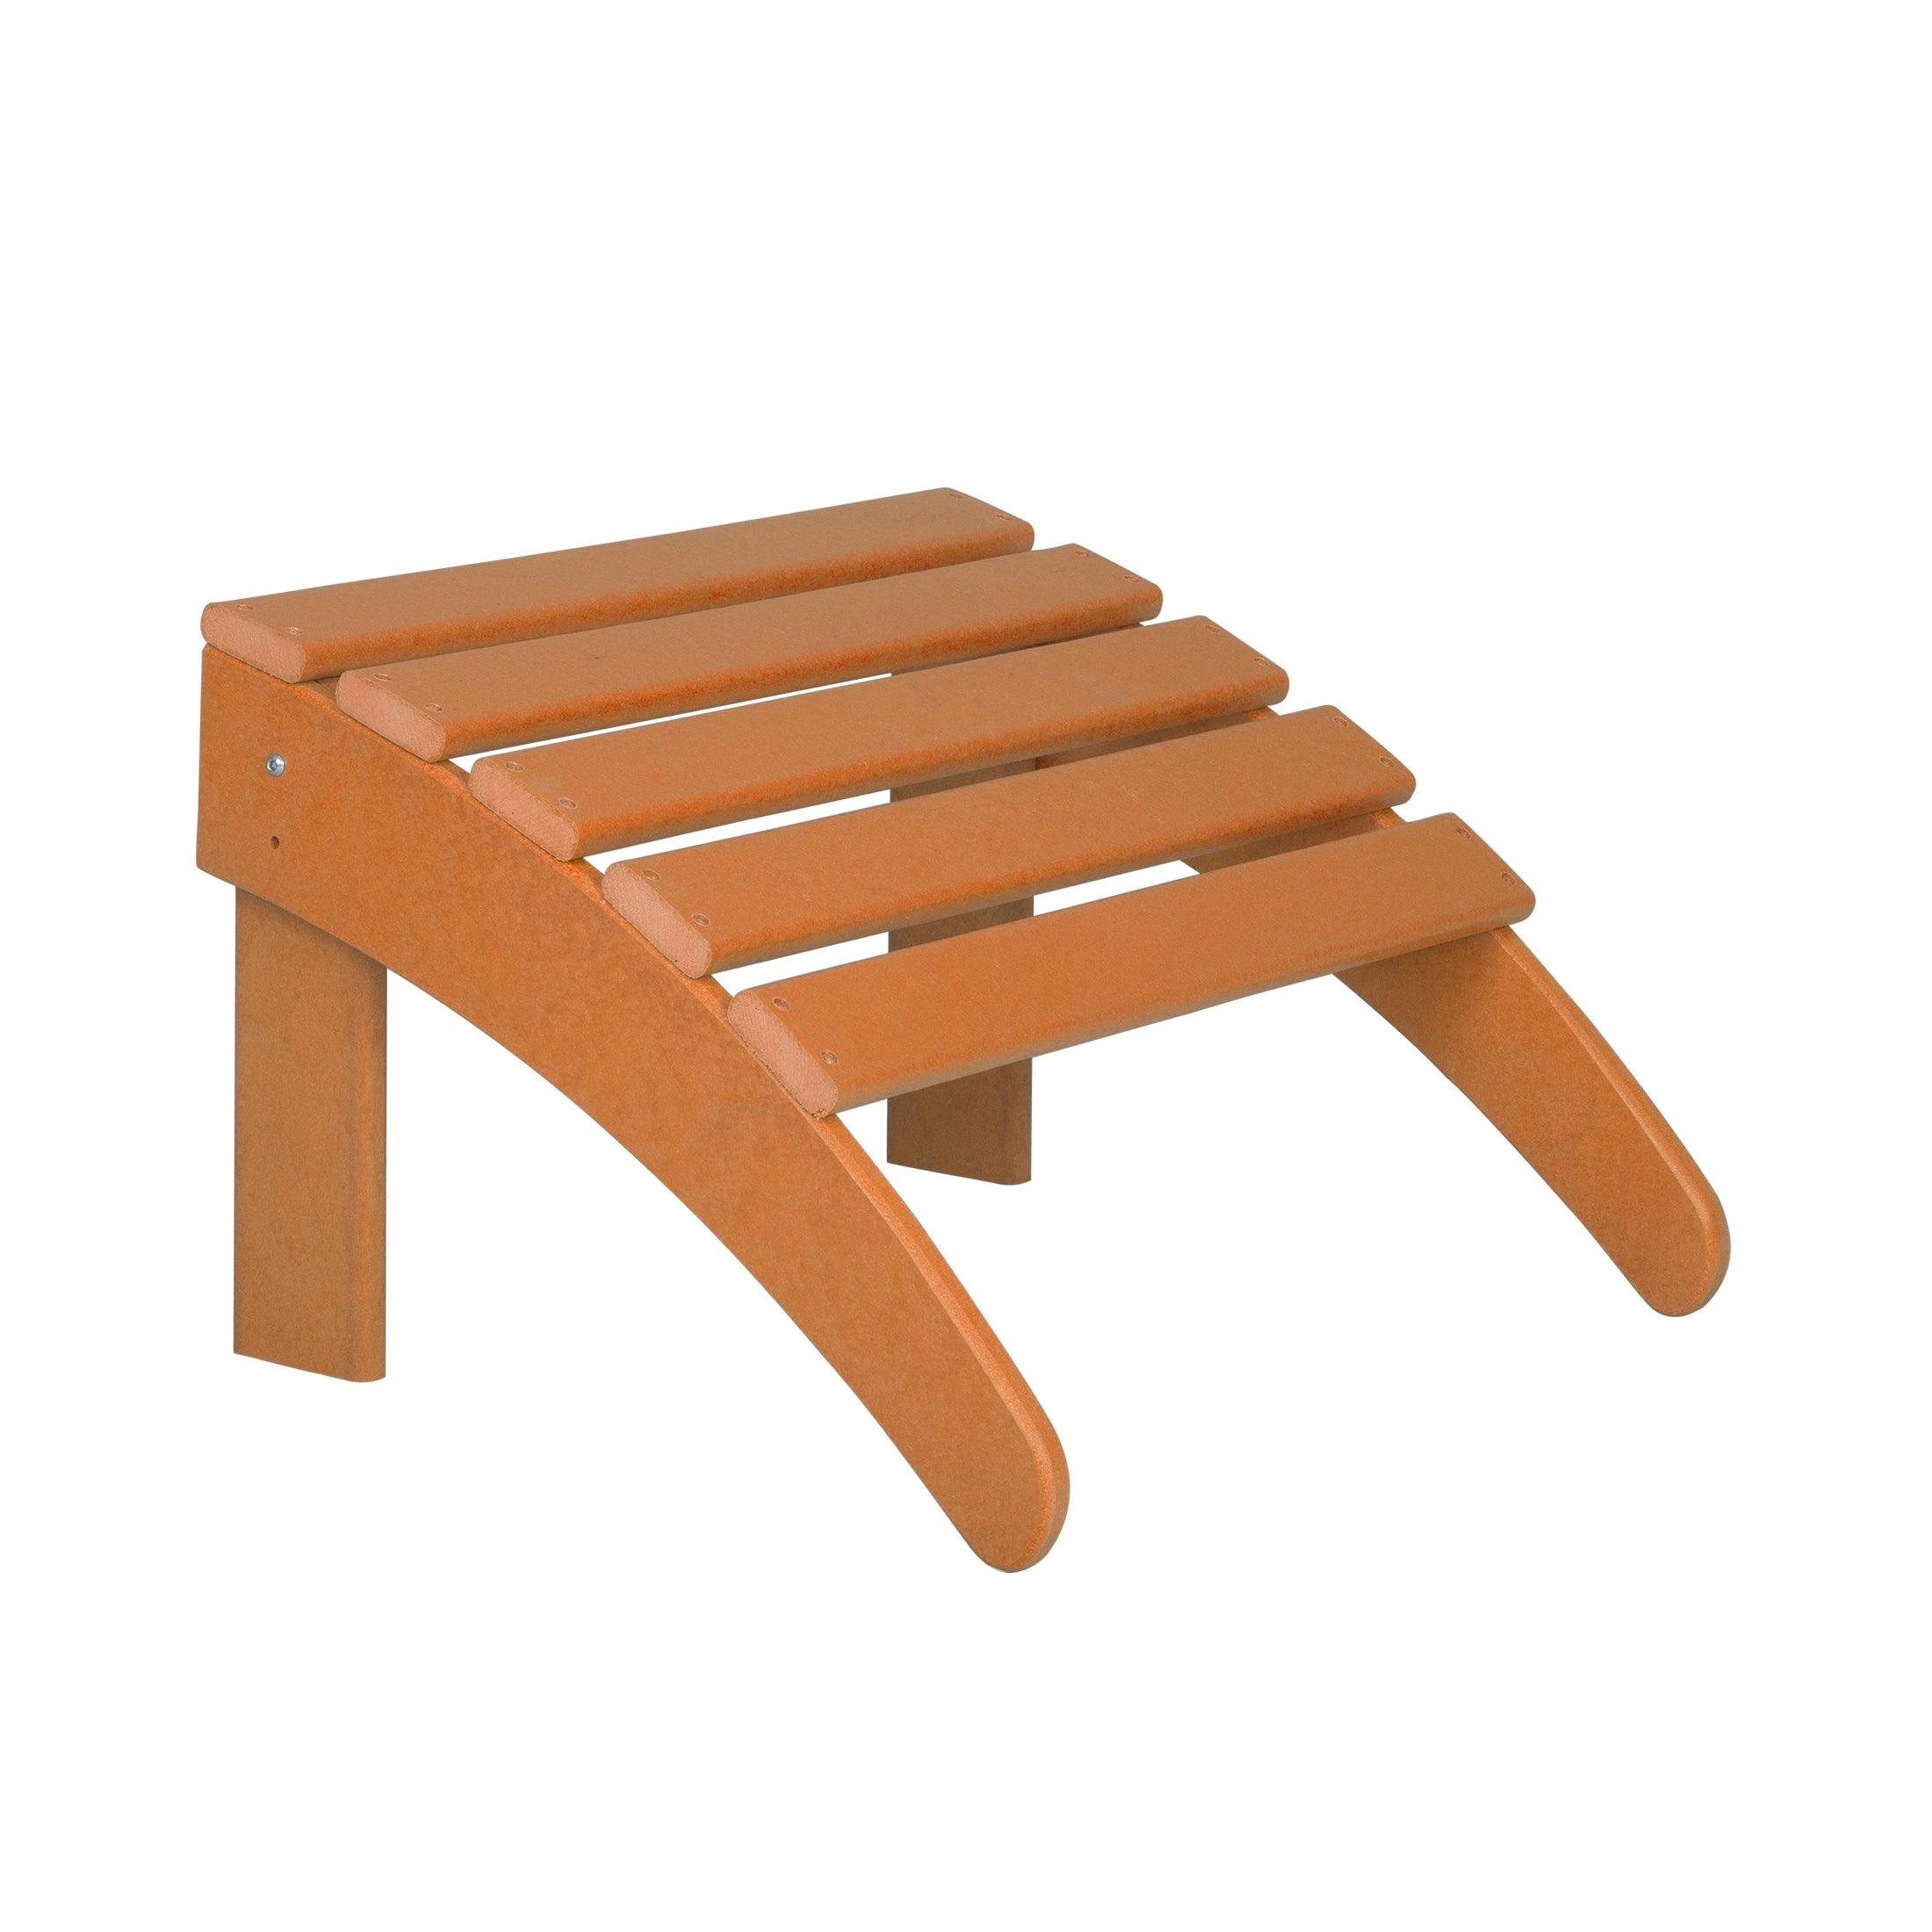 Costaelm Outdoor Adirondack Chair With Ottoman 2-Piece Set, Orange